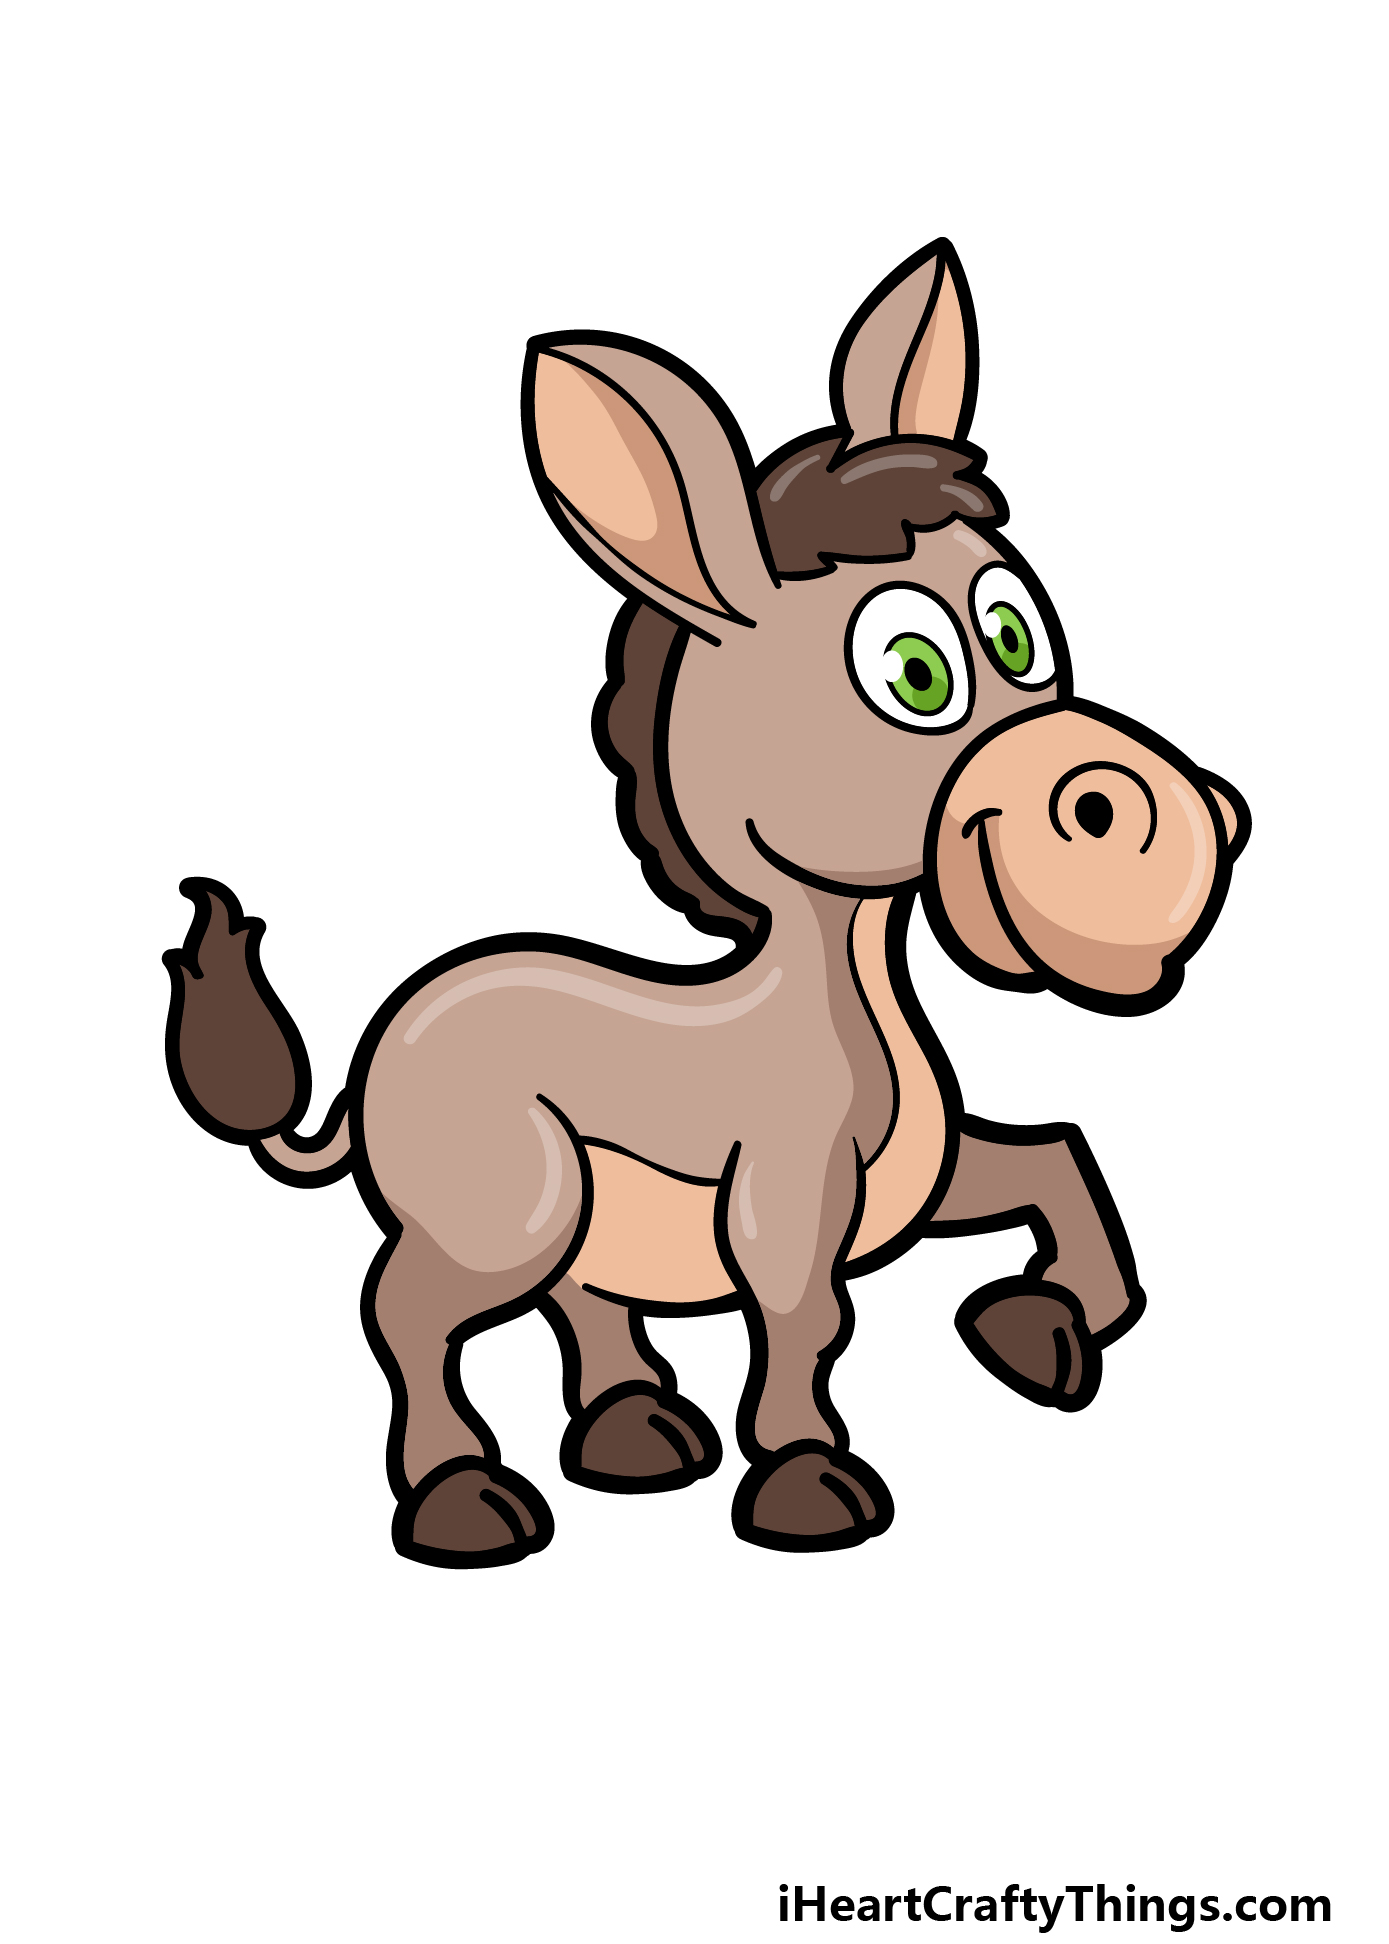 Cartoon Donkey Drawing - How To Draw A Cartoon Donkey Step By Step